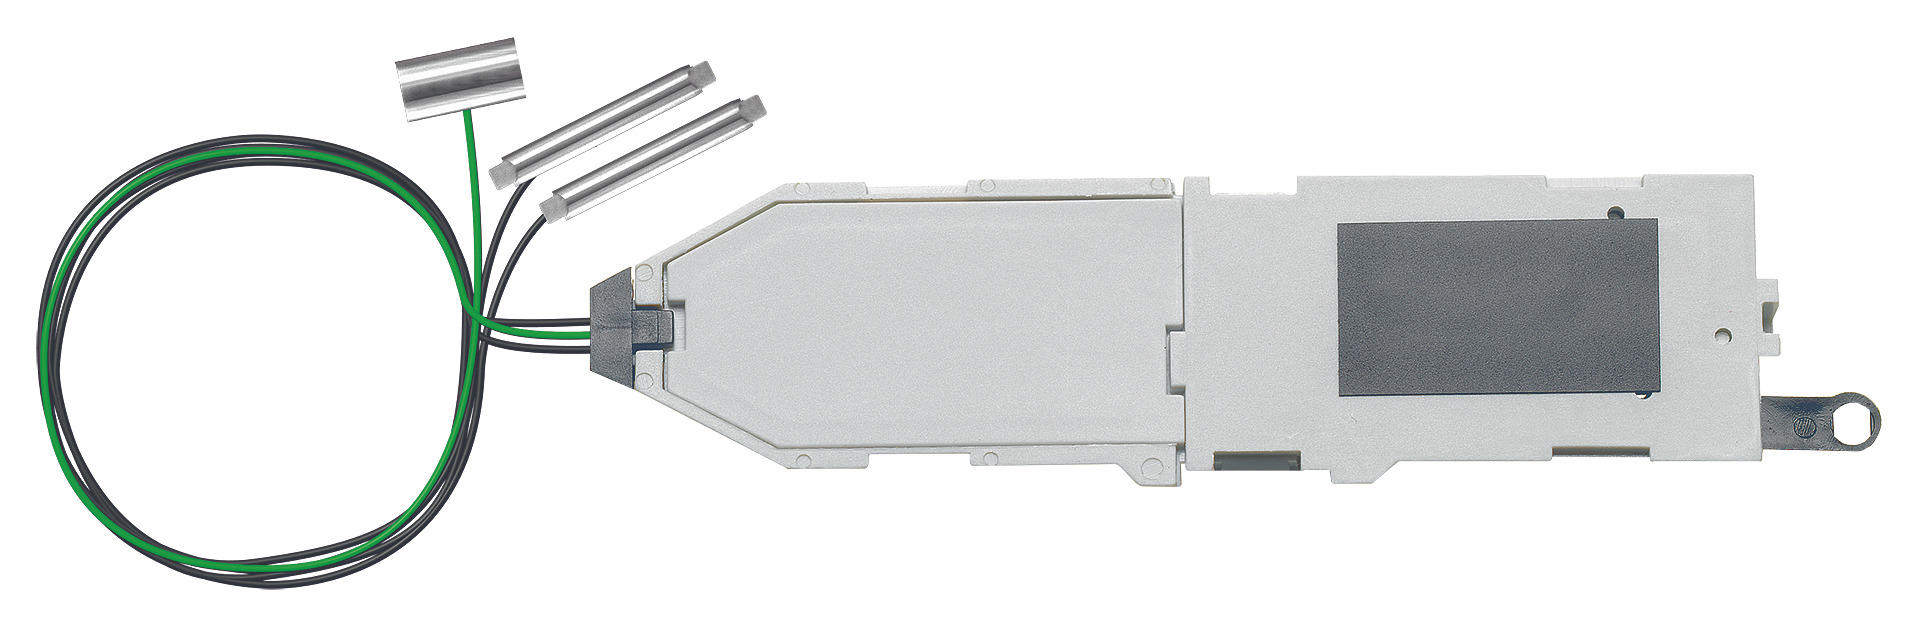 Roco 42624 - Digital switch drive